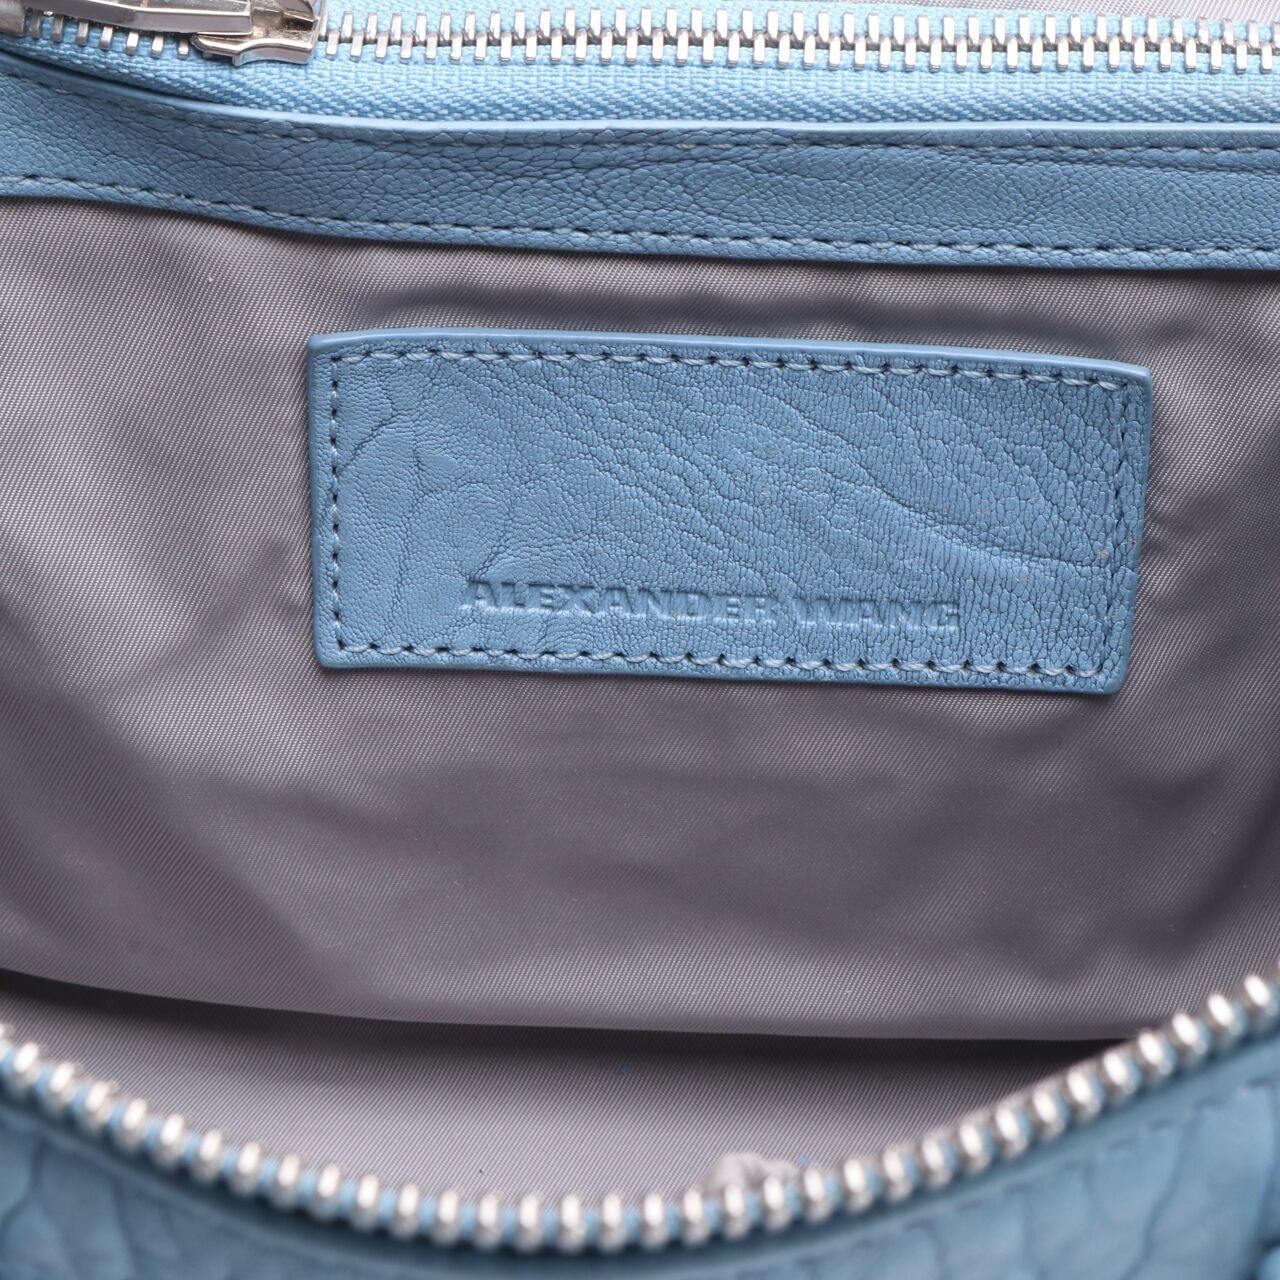 Alexander Wang Blue Pebbled Leather Rocco Duffle Bag Satchel